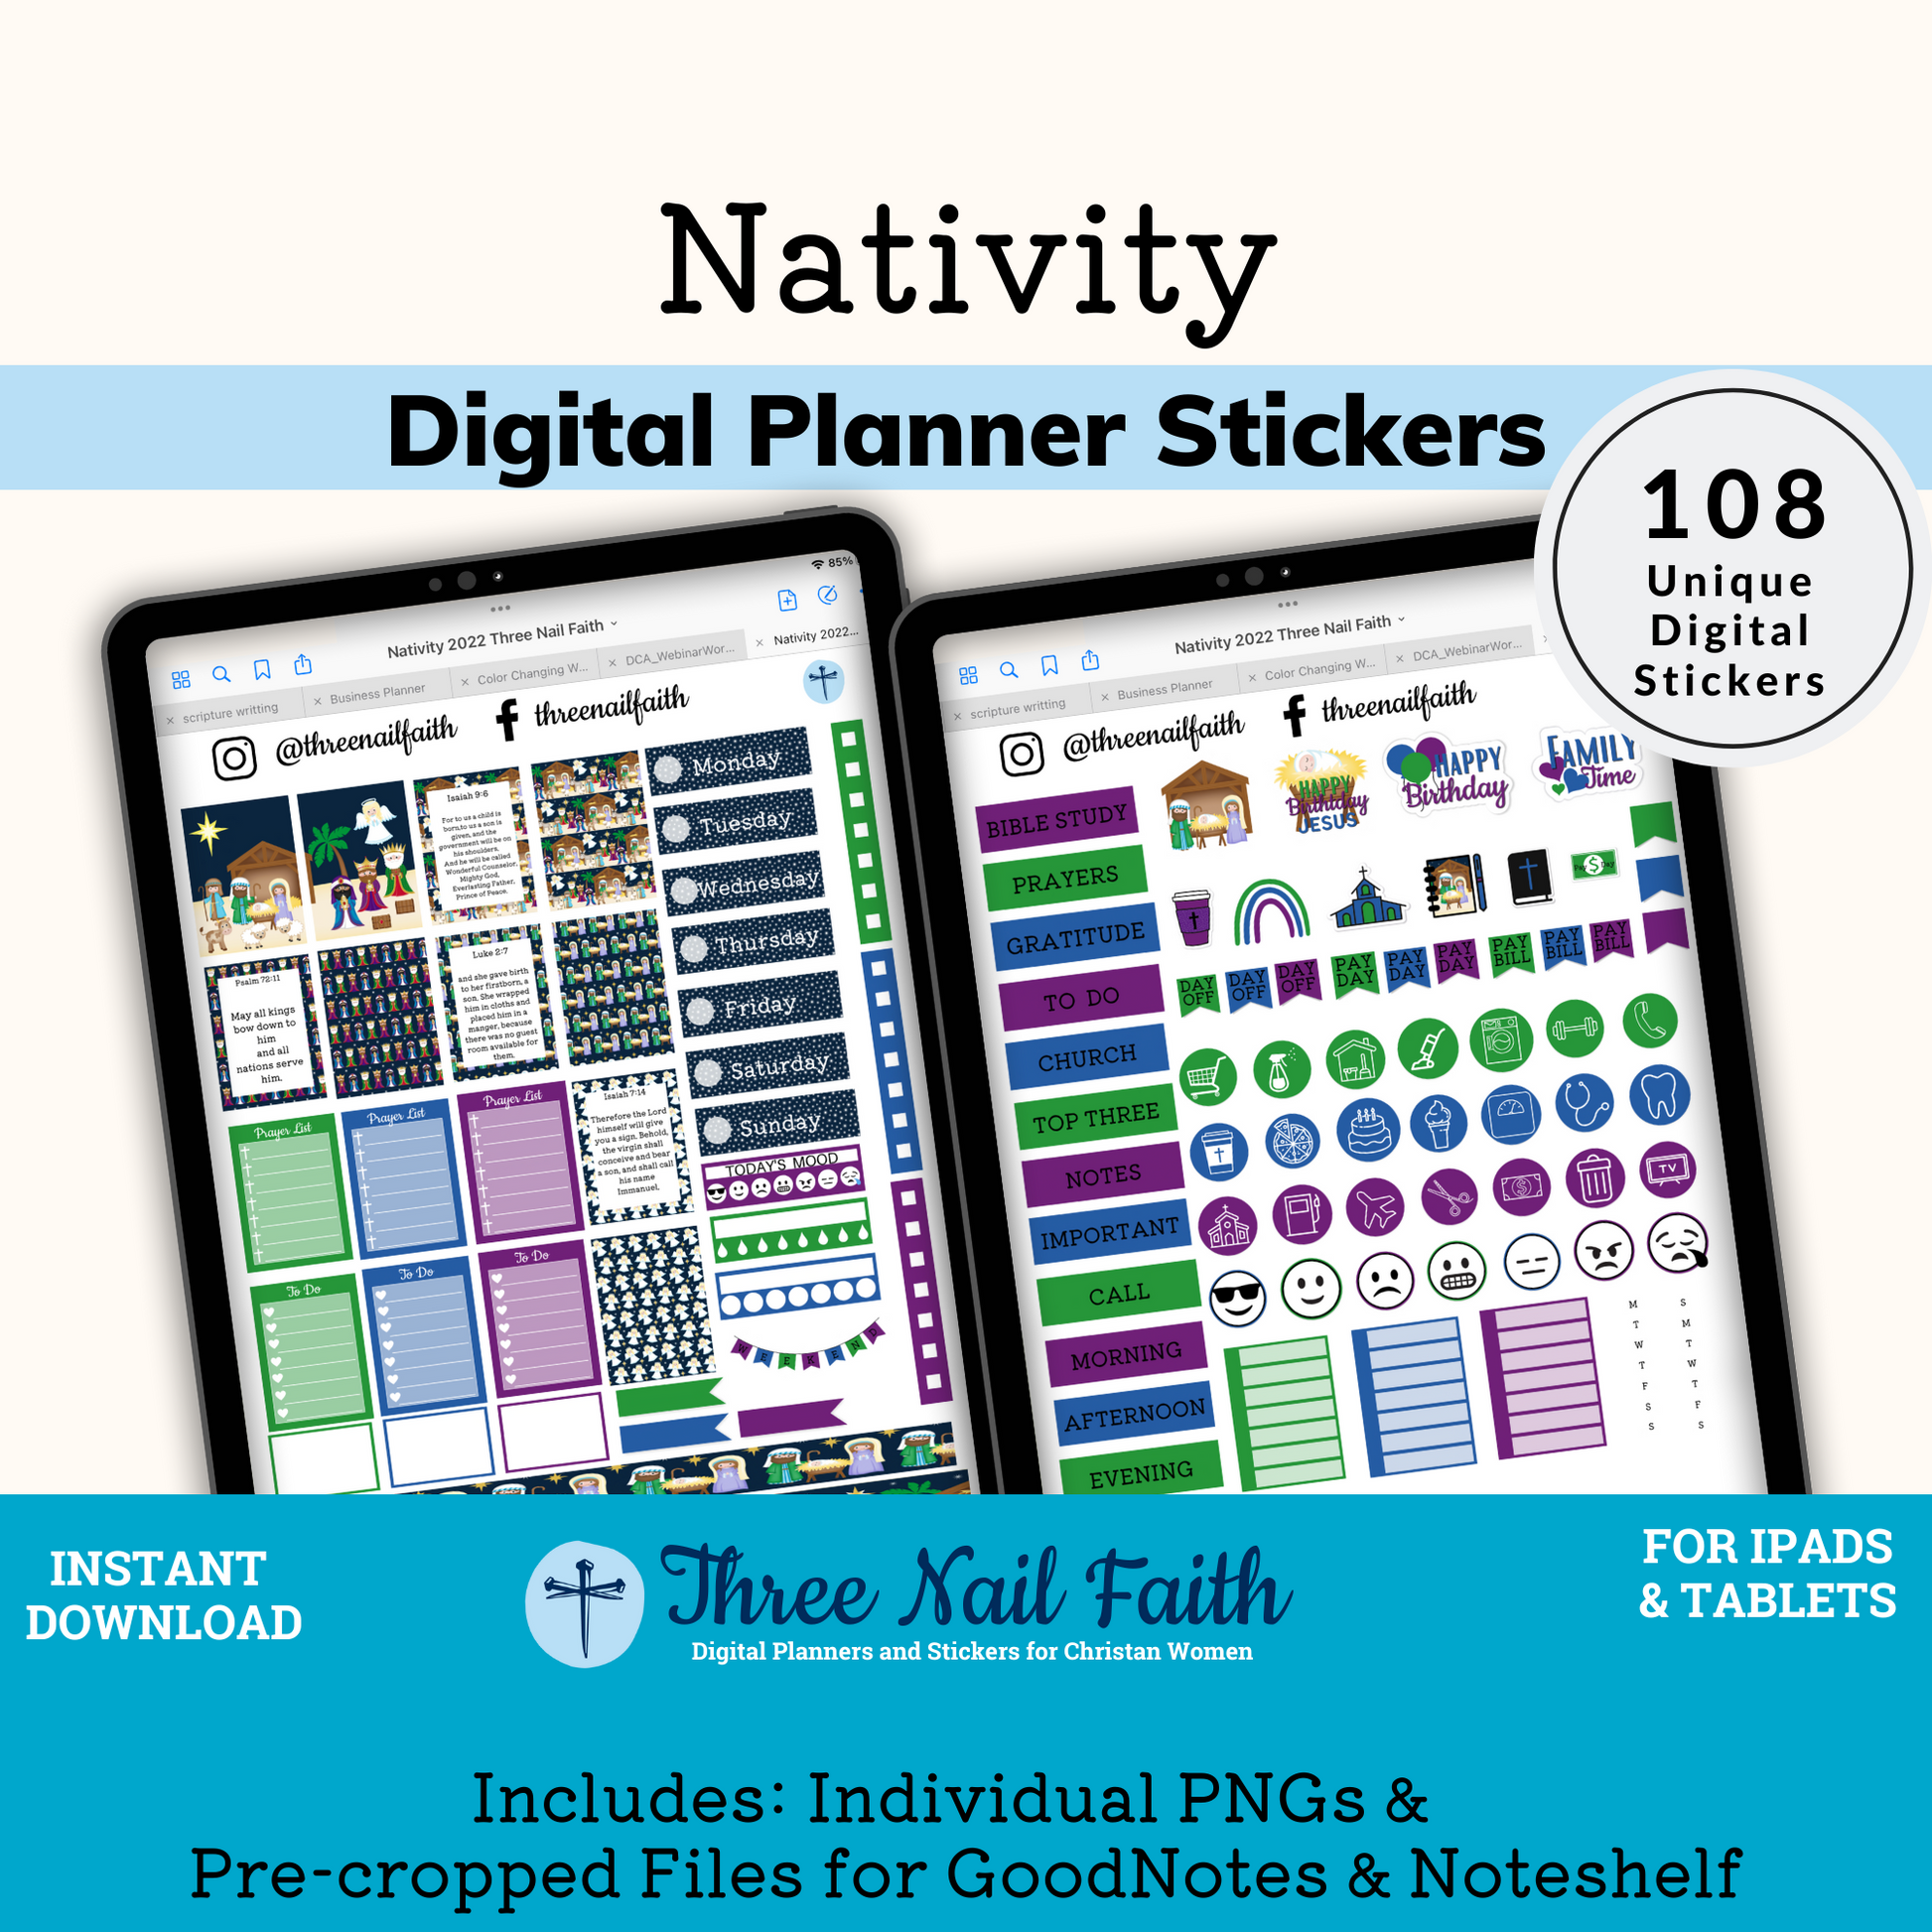 Nativity digital sticker kit with 108 Digital stickers